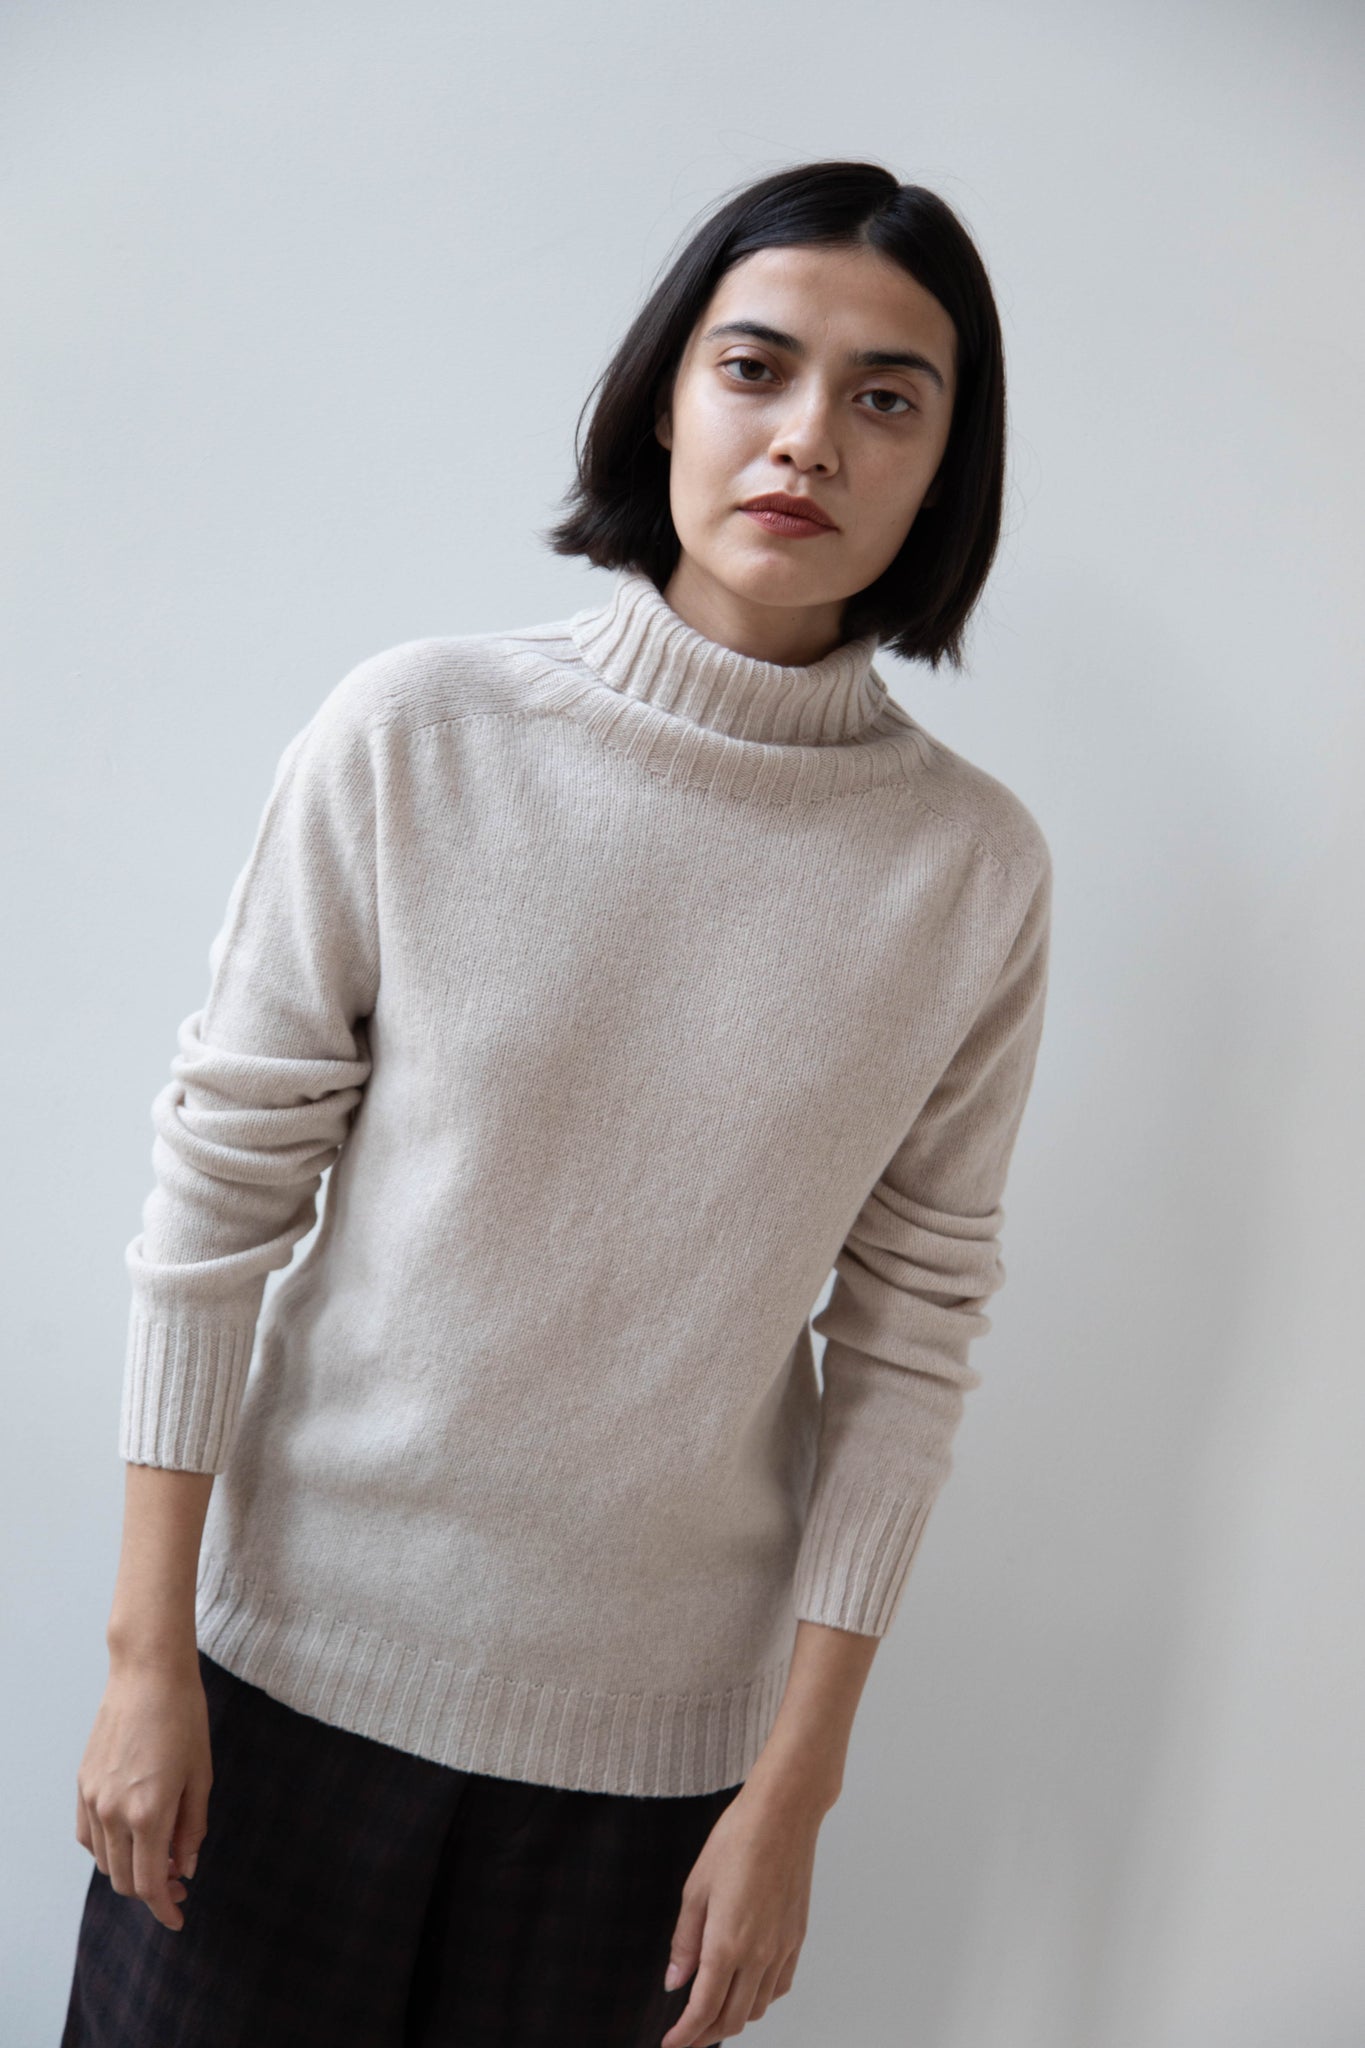 Armen | Sweater in Off-White